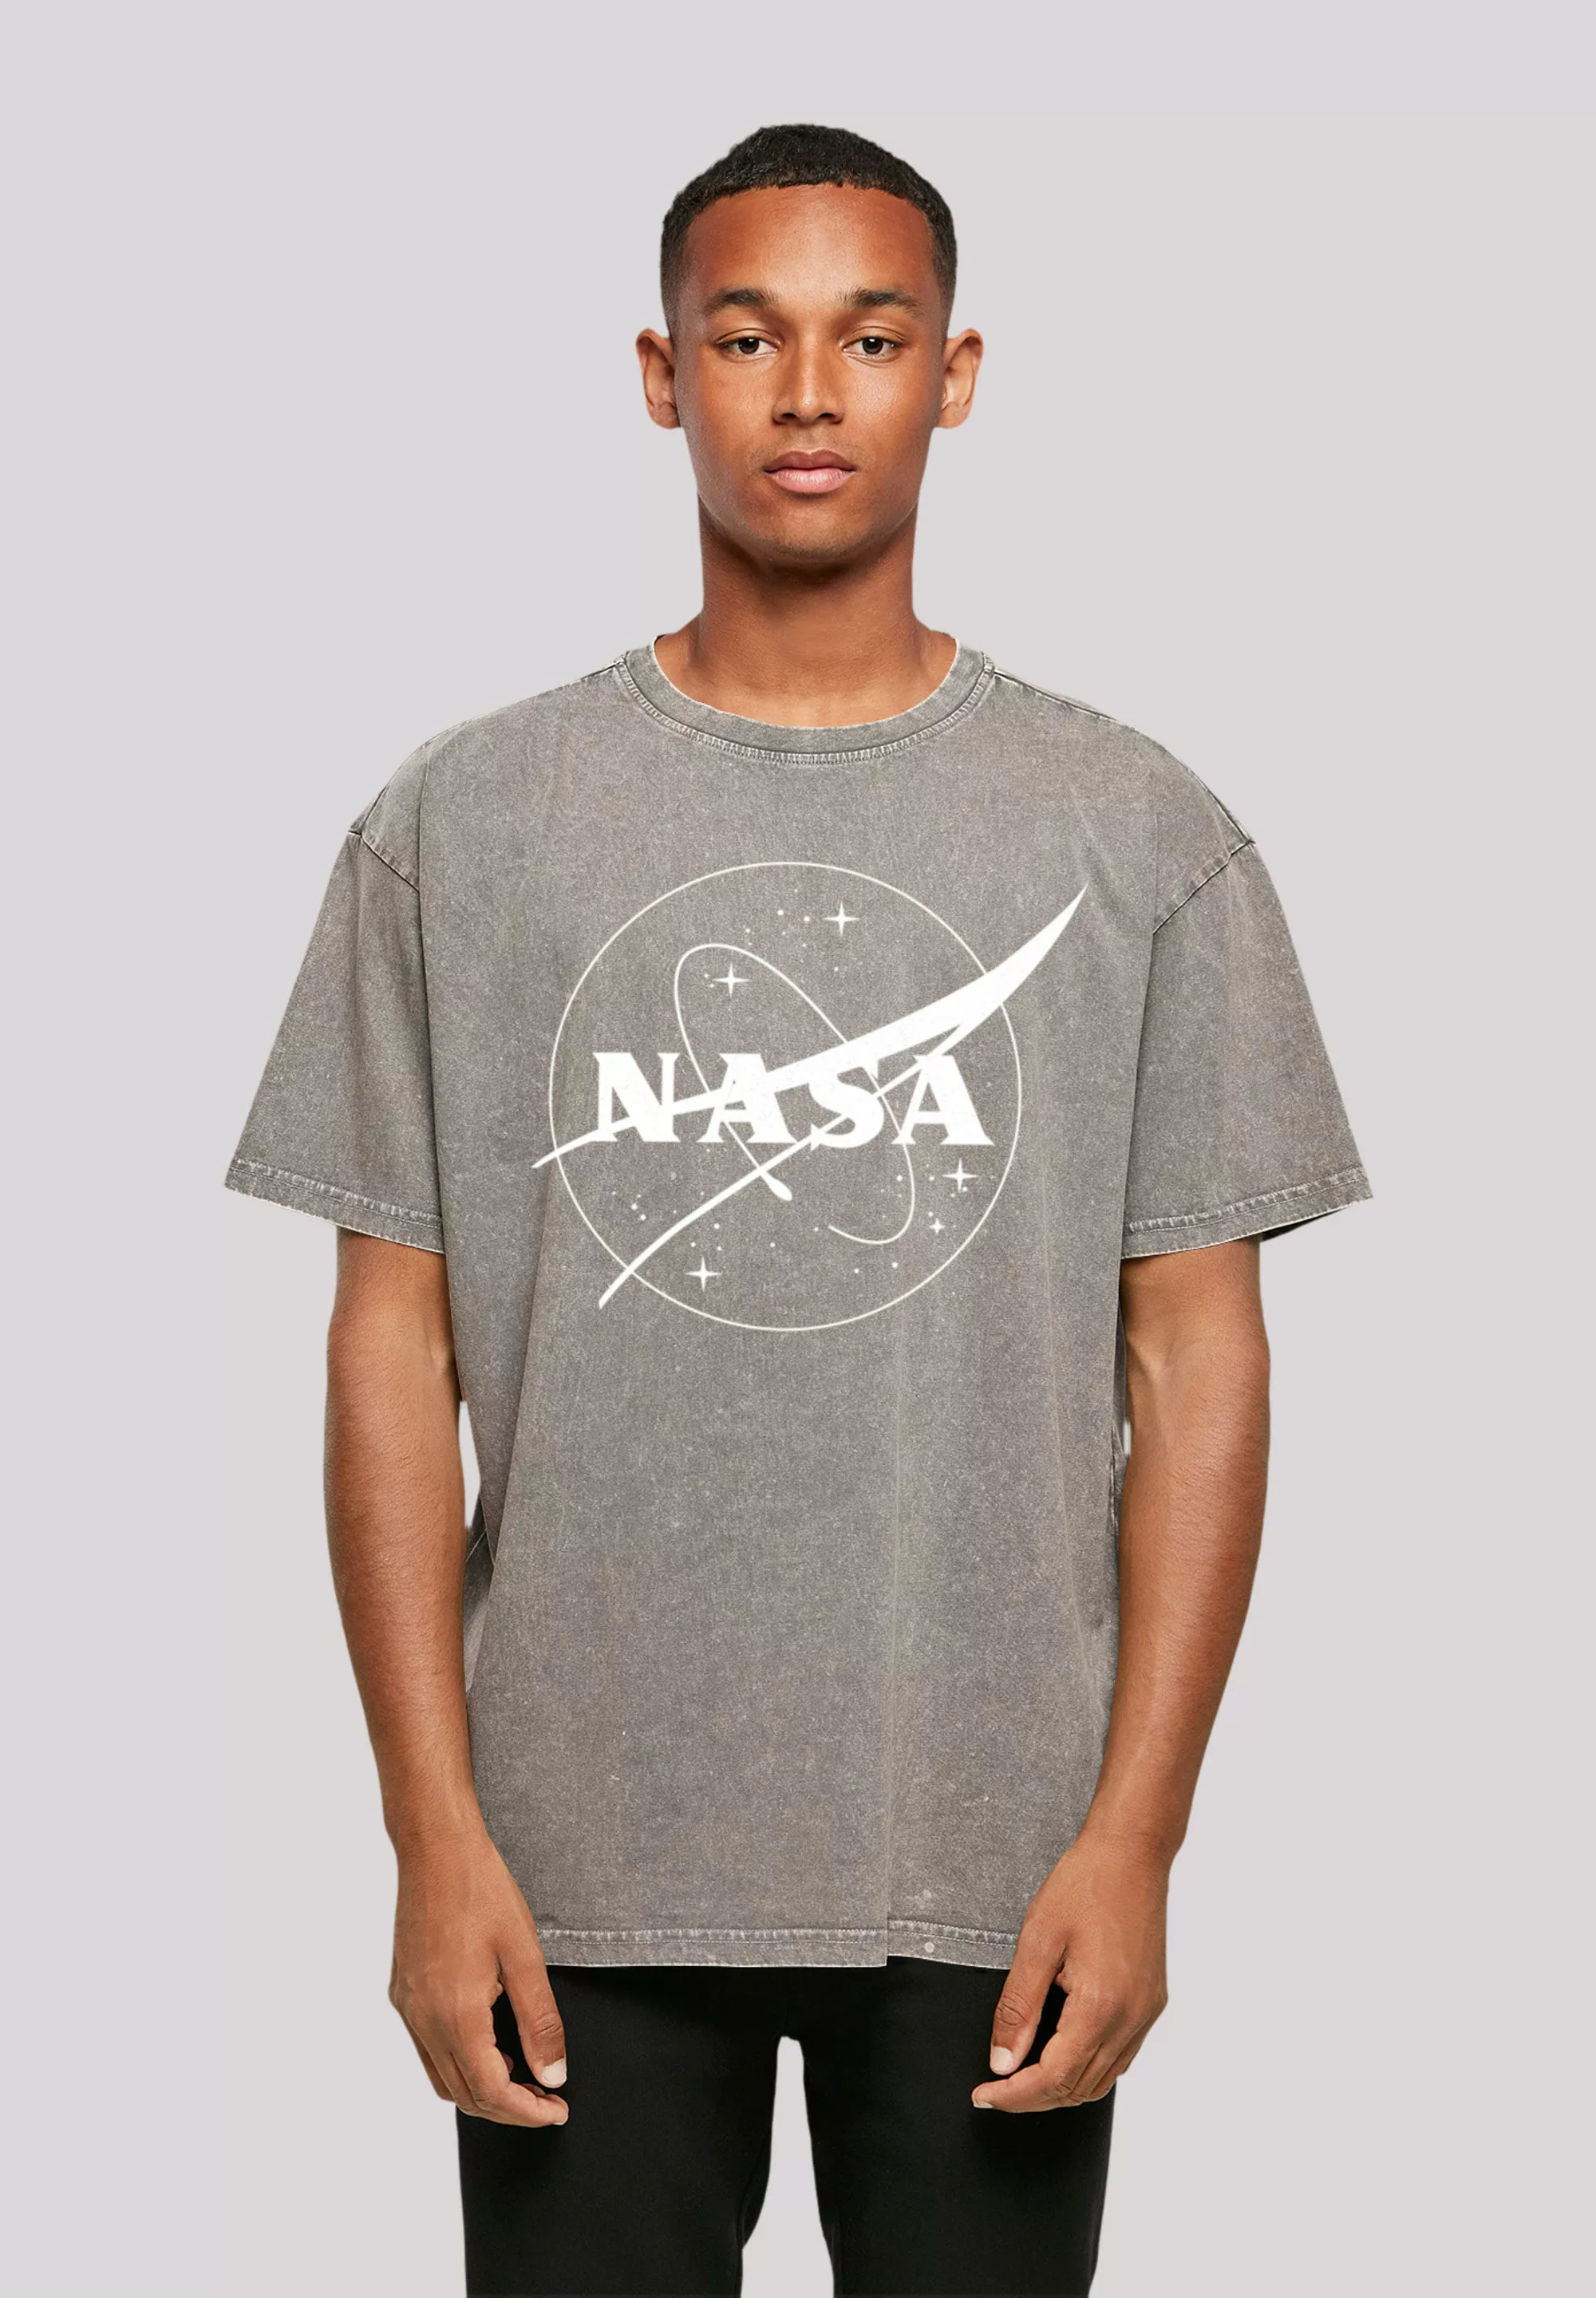 F4NT4STIC T-Shirt "NASA Classic Insignia Logo", Print günstig online kaufen